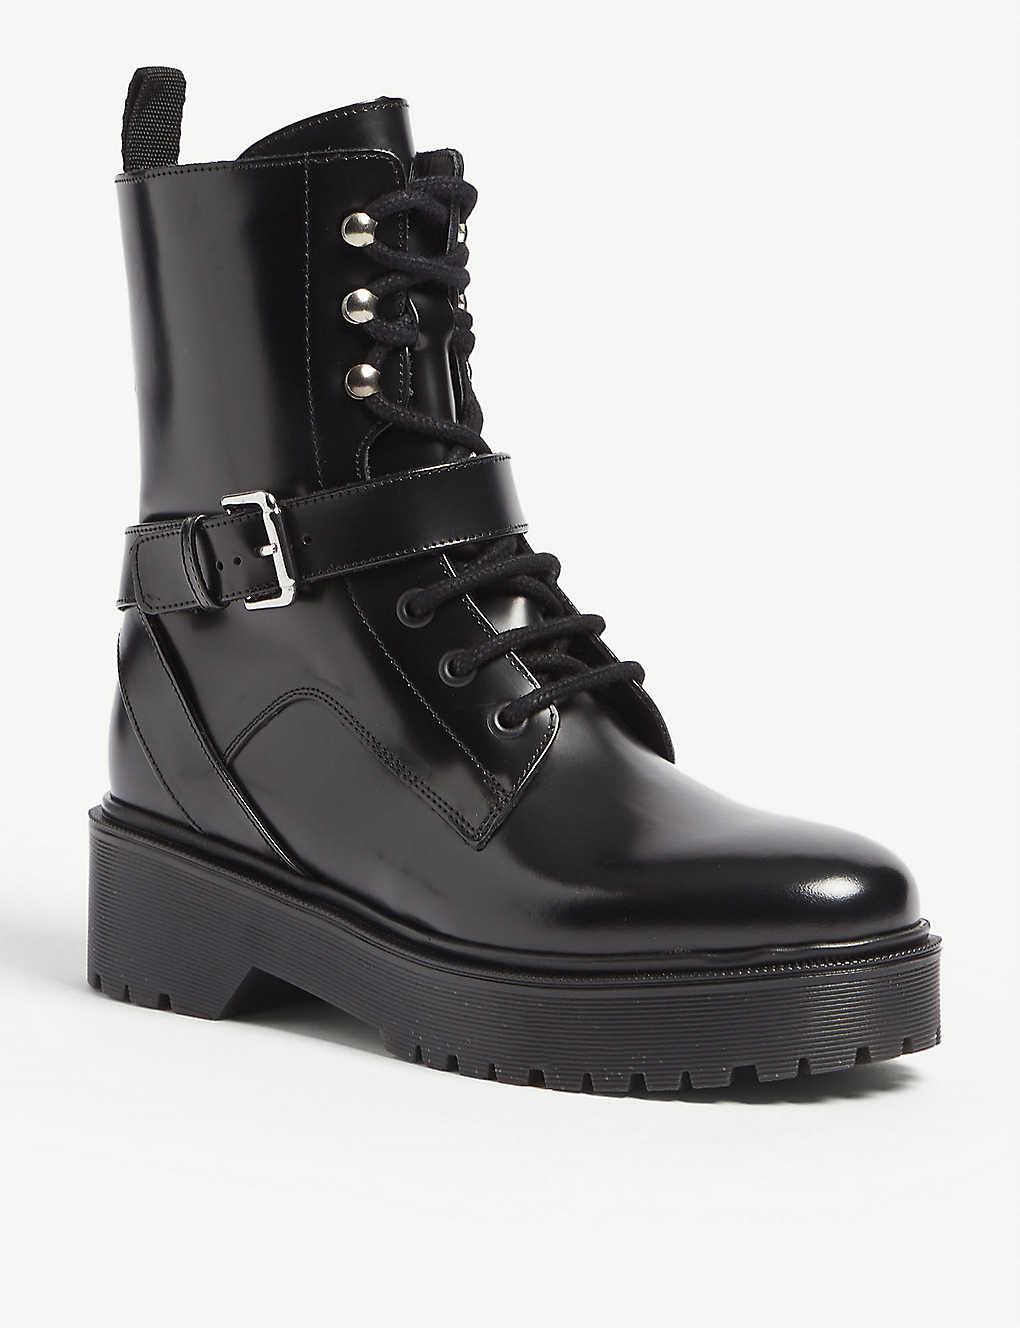 Maje Frankhook Leather Ankle Boots in Black | Lyst